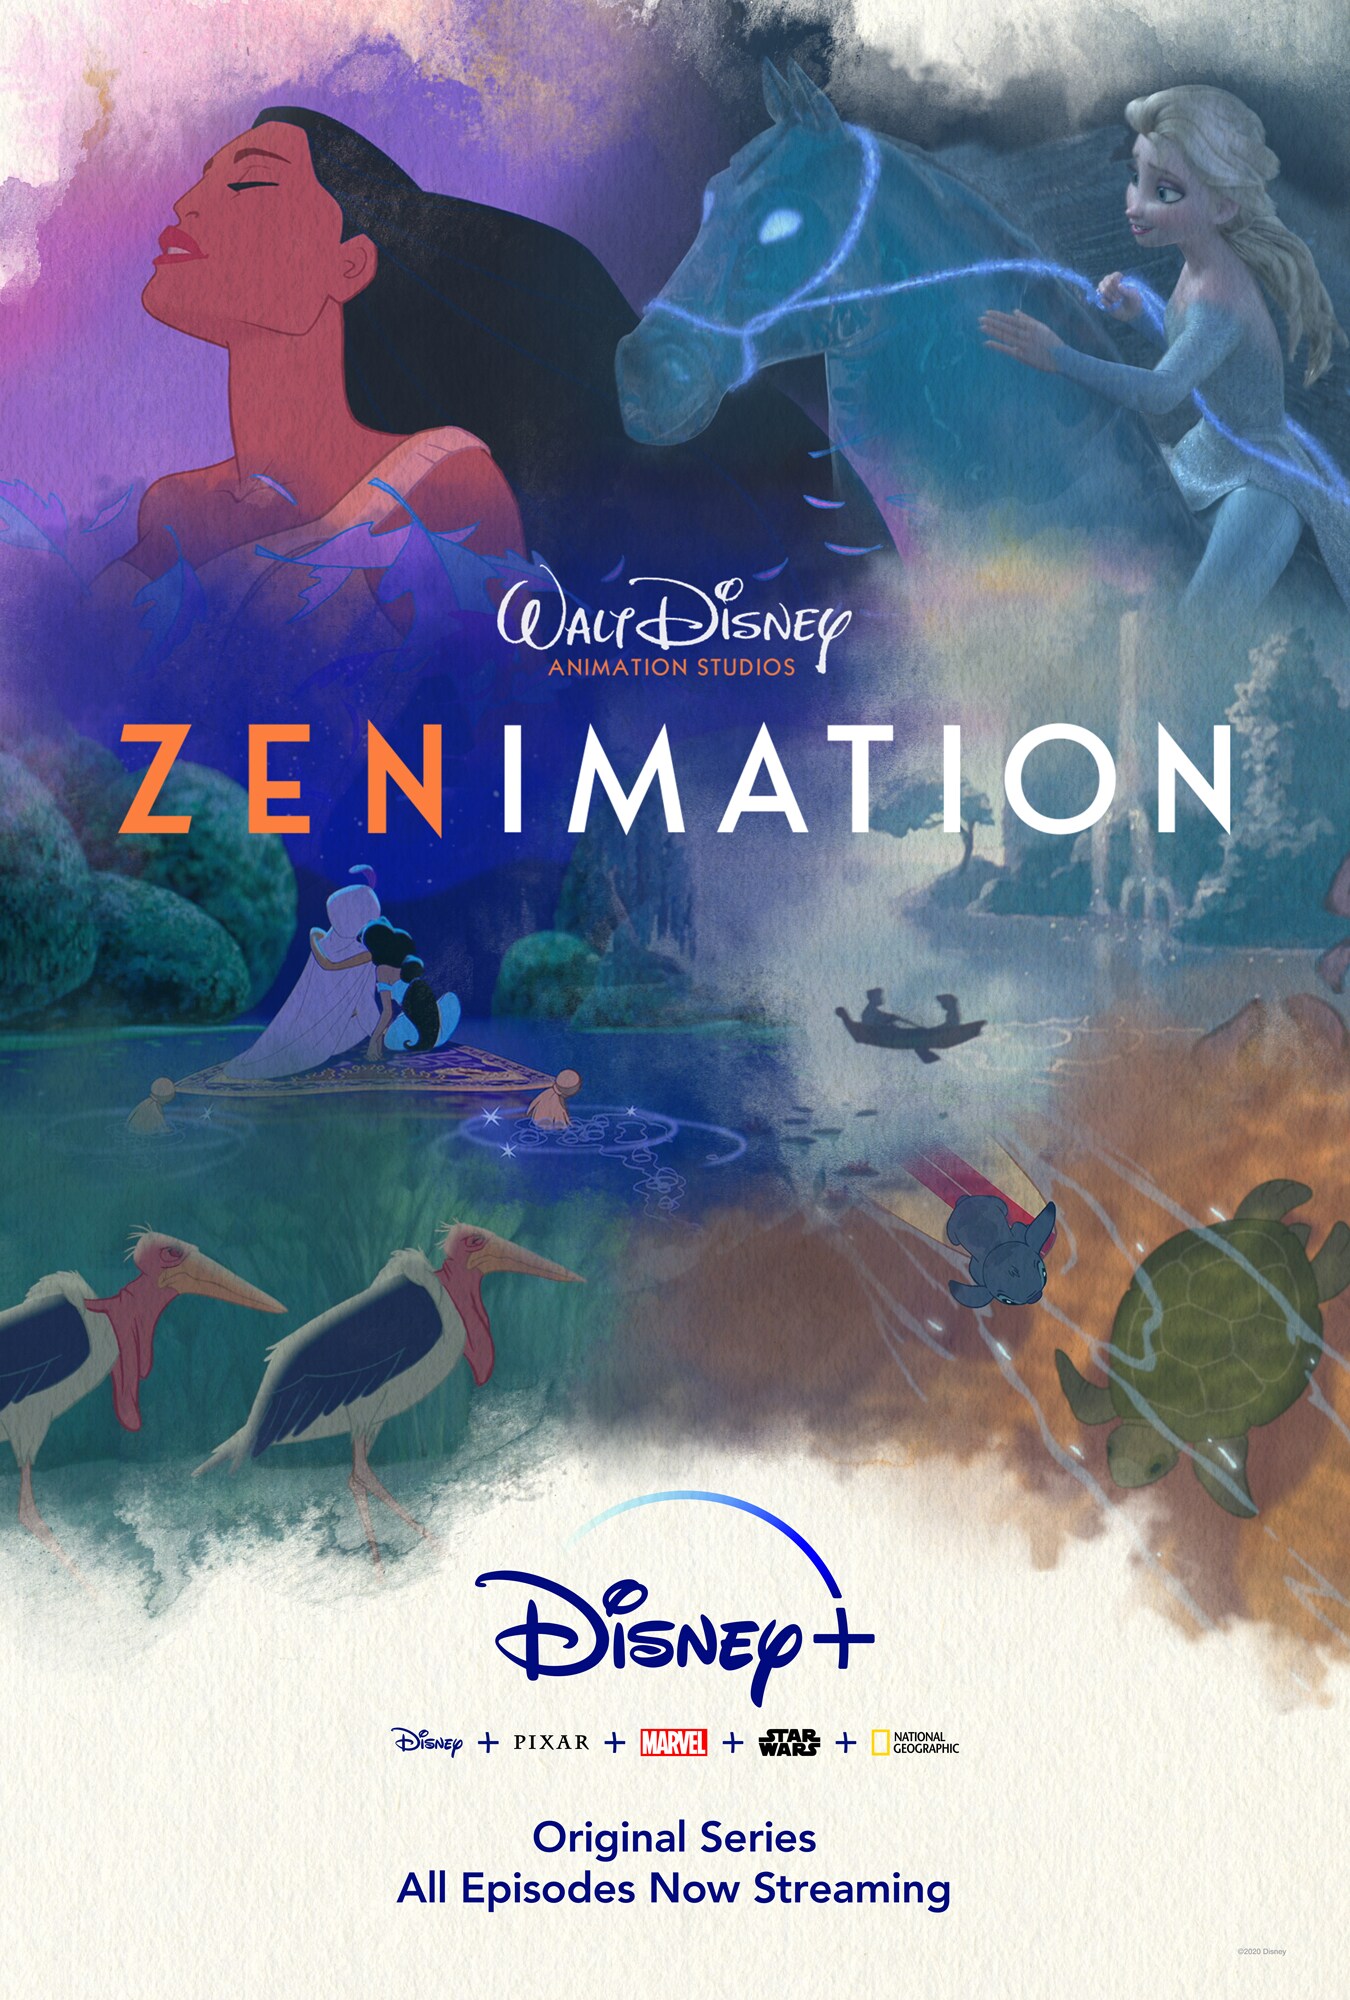 Zenimation comes to Disney+